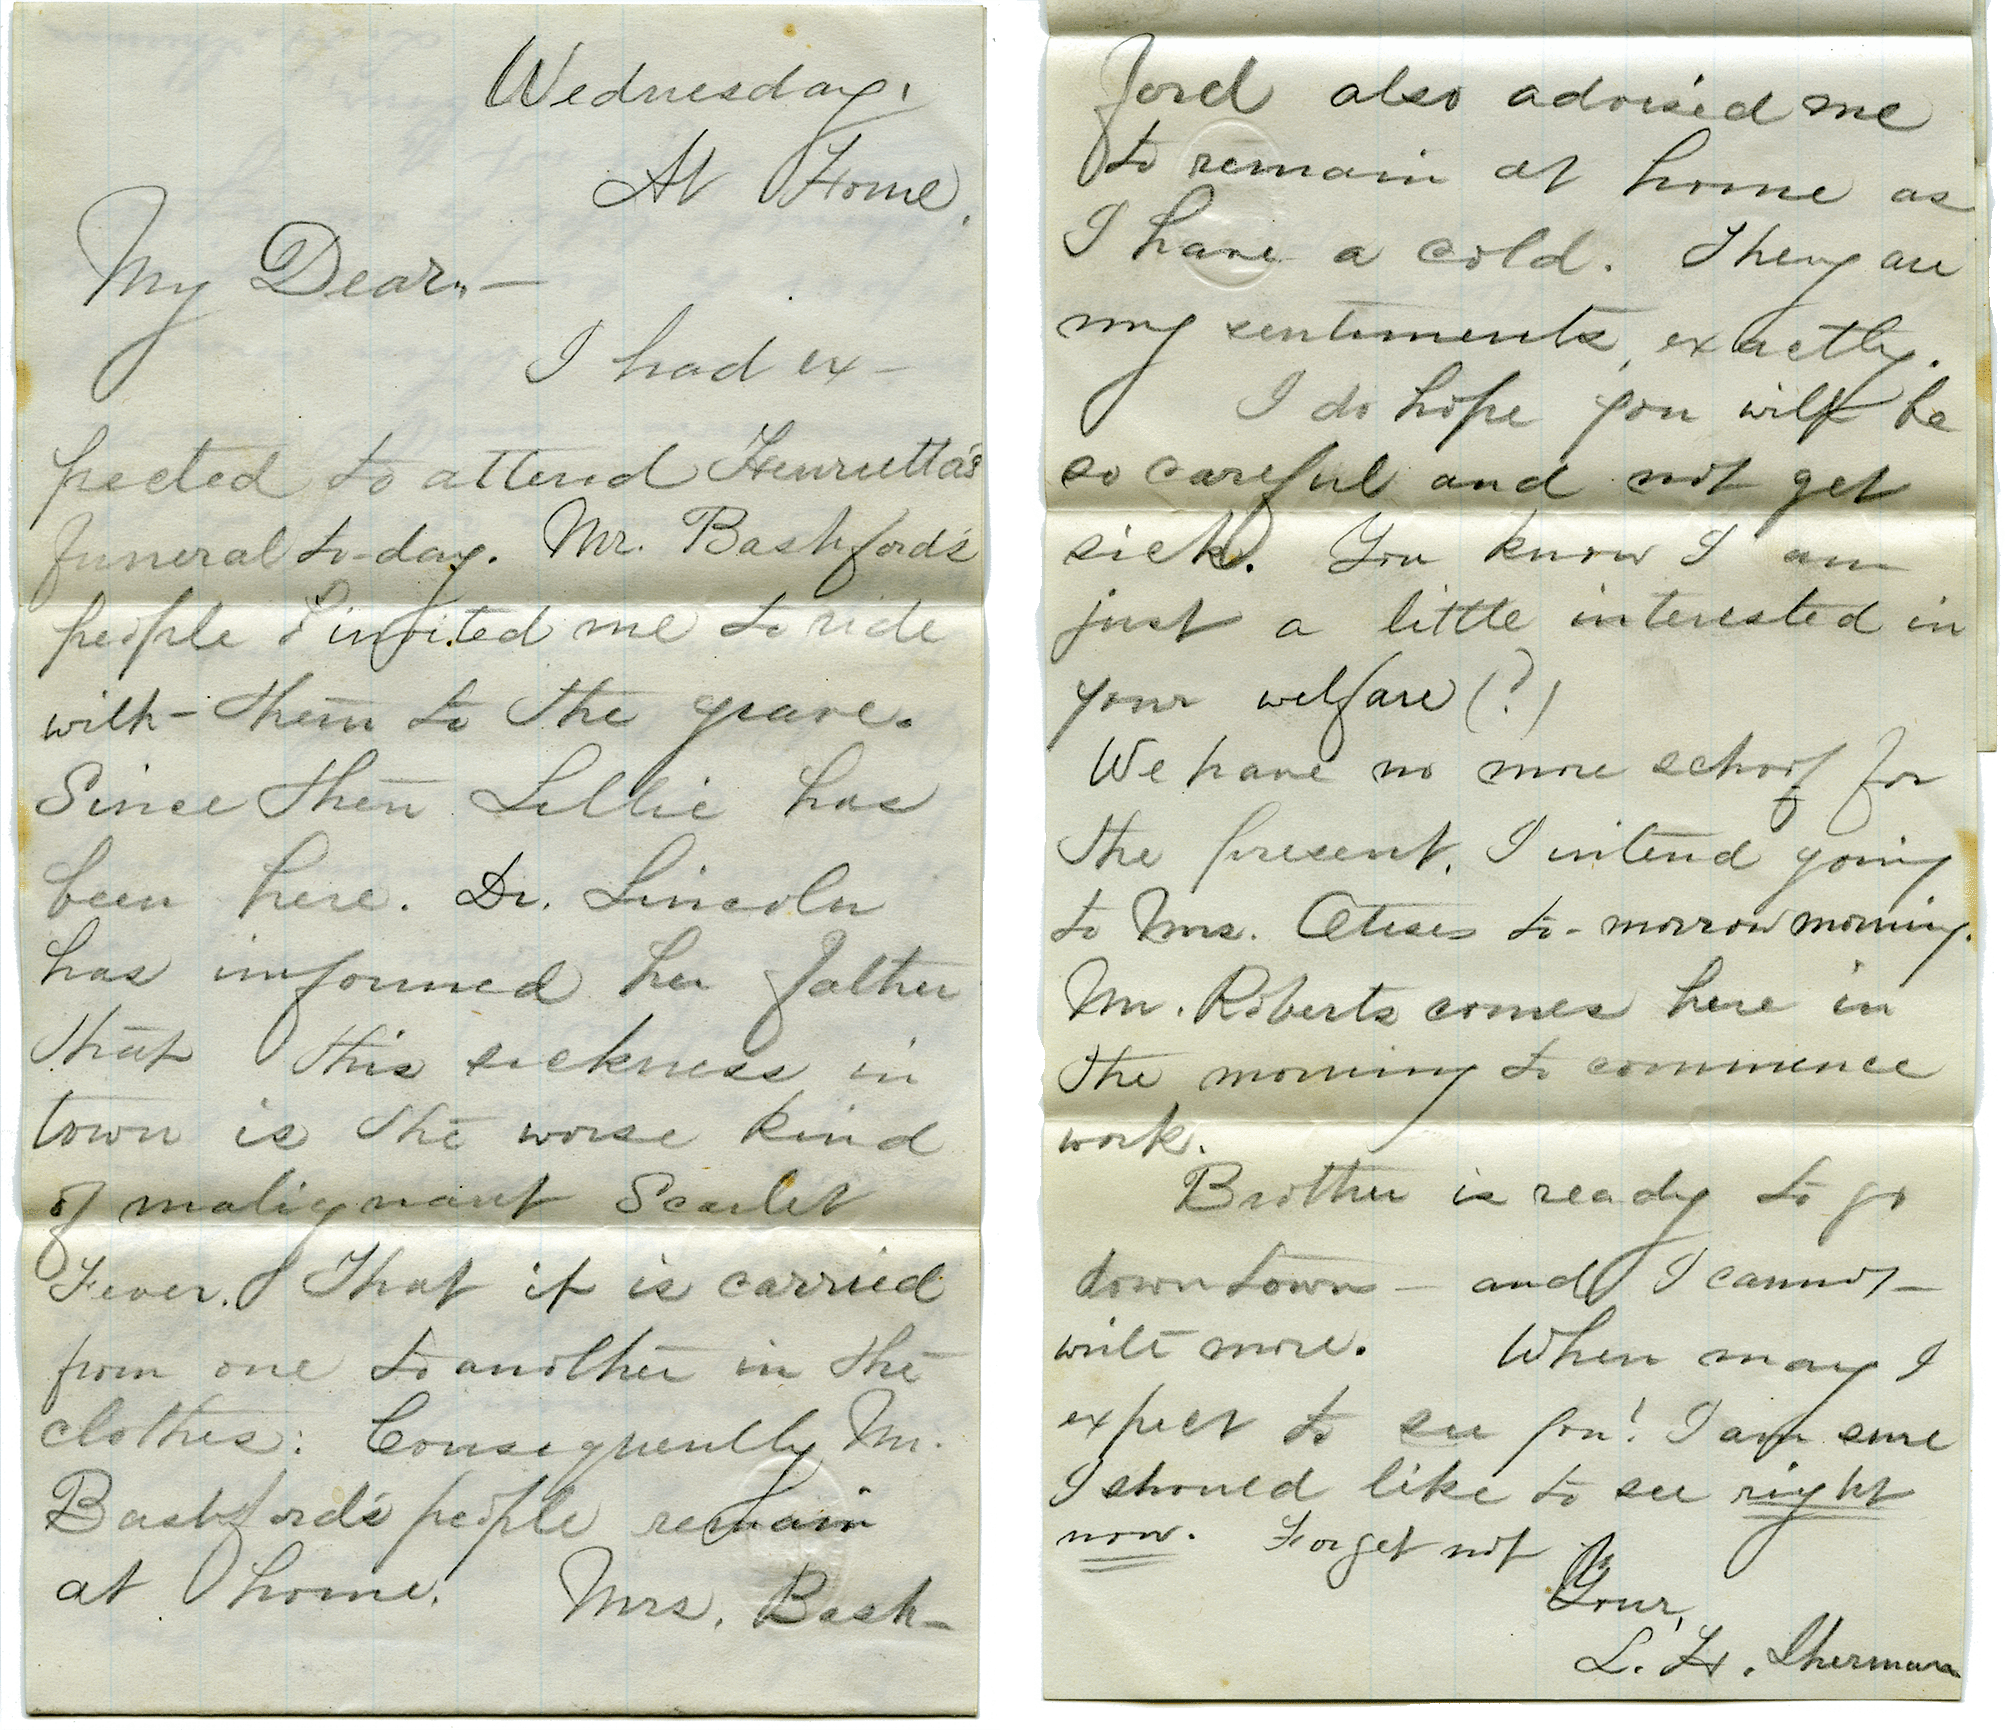 Eli P. Clark warning him of a scarlet fever outbreak in Prescott, Arionza, March 1877